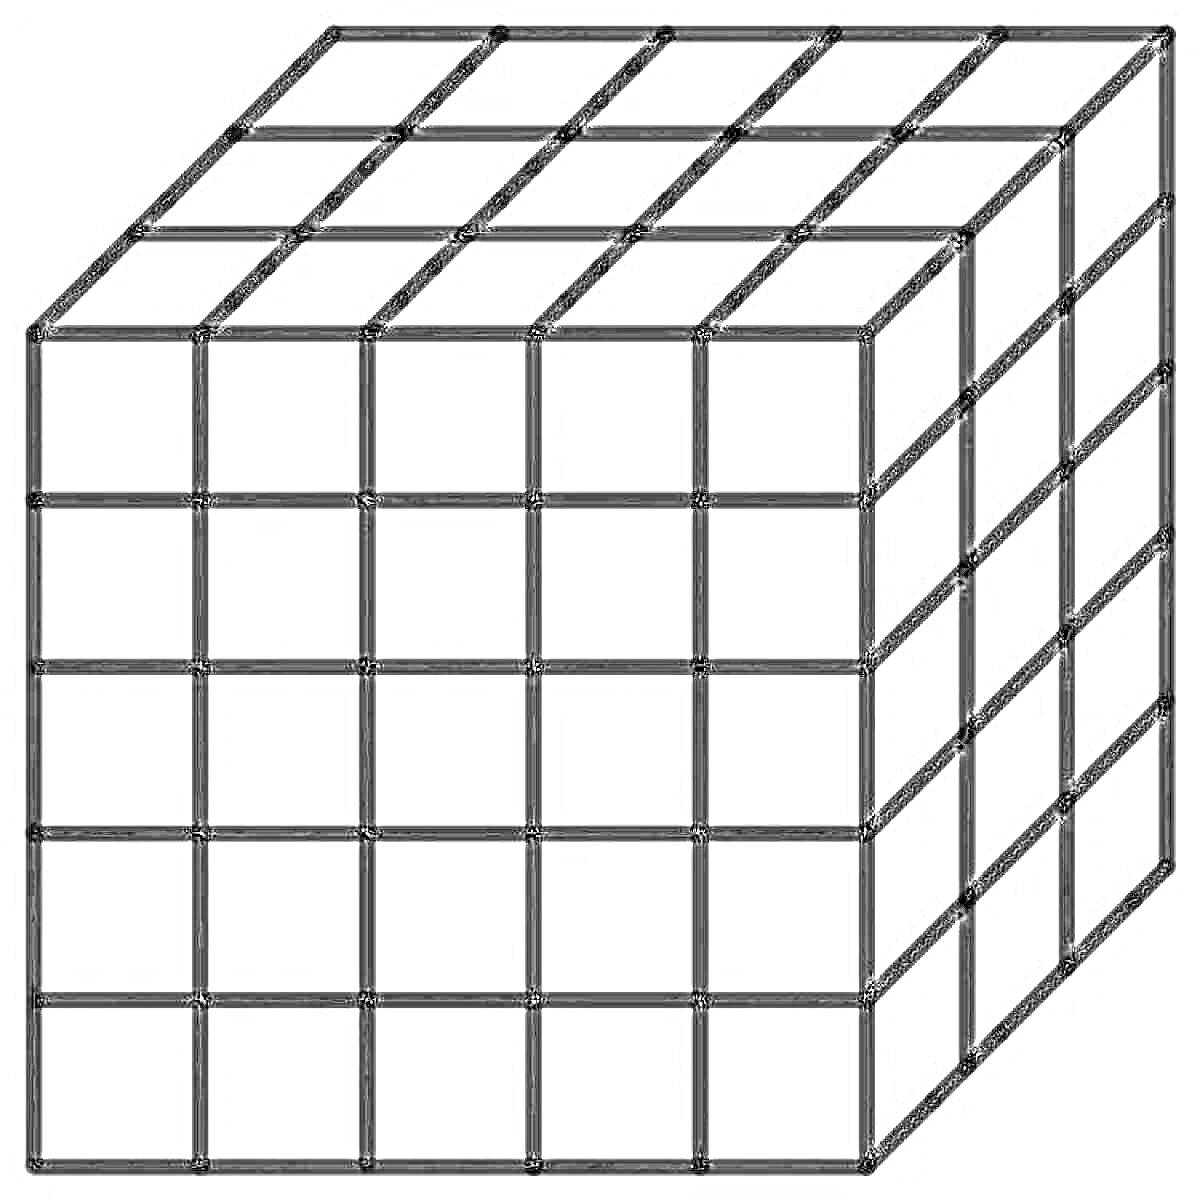 Изображение кубика Рубика с 4x4 сегментами на каждой грани